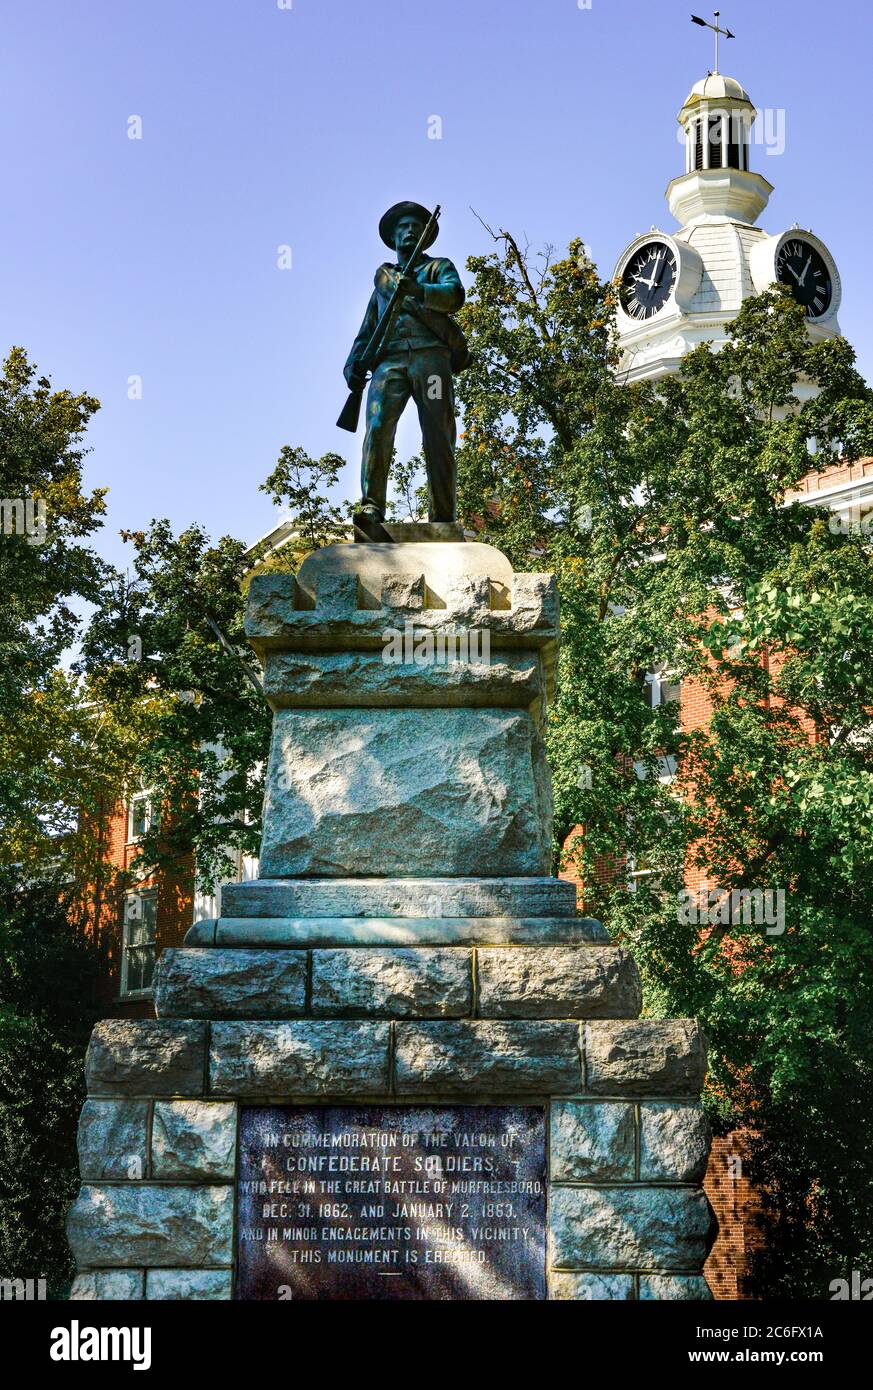 A commemorative Confederate Solider Statue on plinth with plaque dedication to fallen confederate soldiers in the Civil War, Murfreesboro, TN, USA, Stock Photo